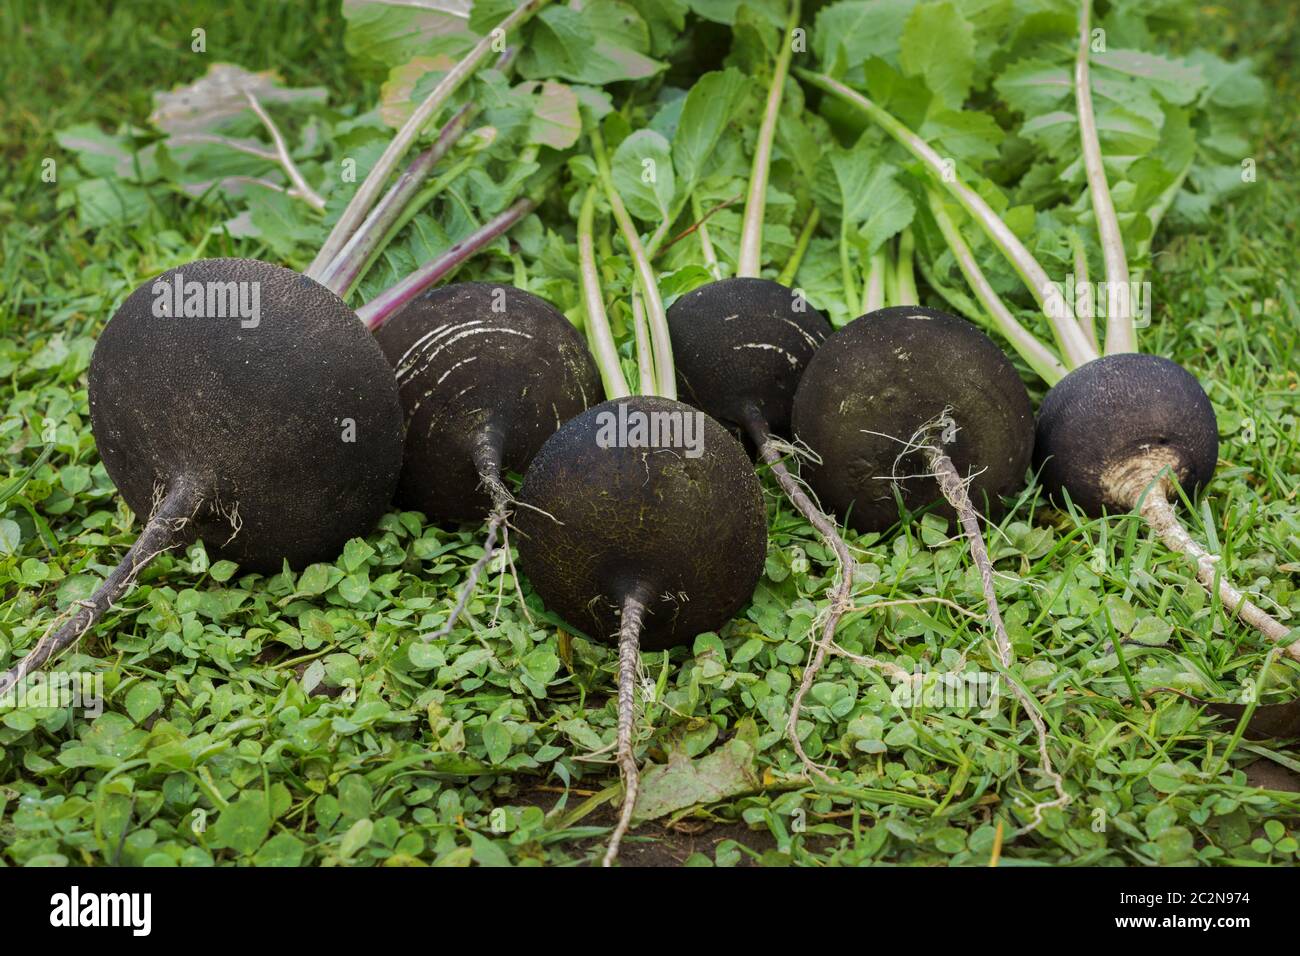 Black radish reaches maturity in October Stock Photo